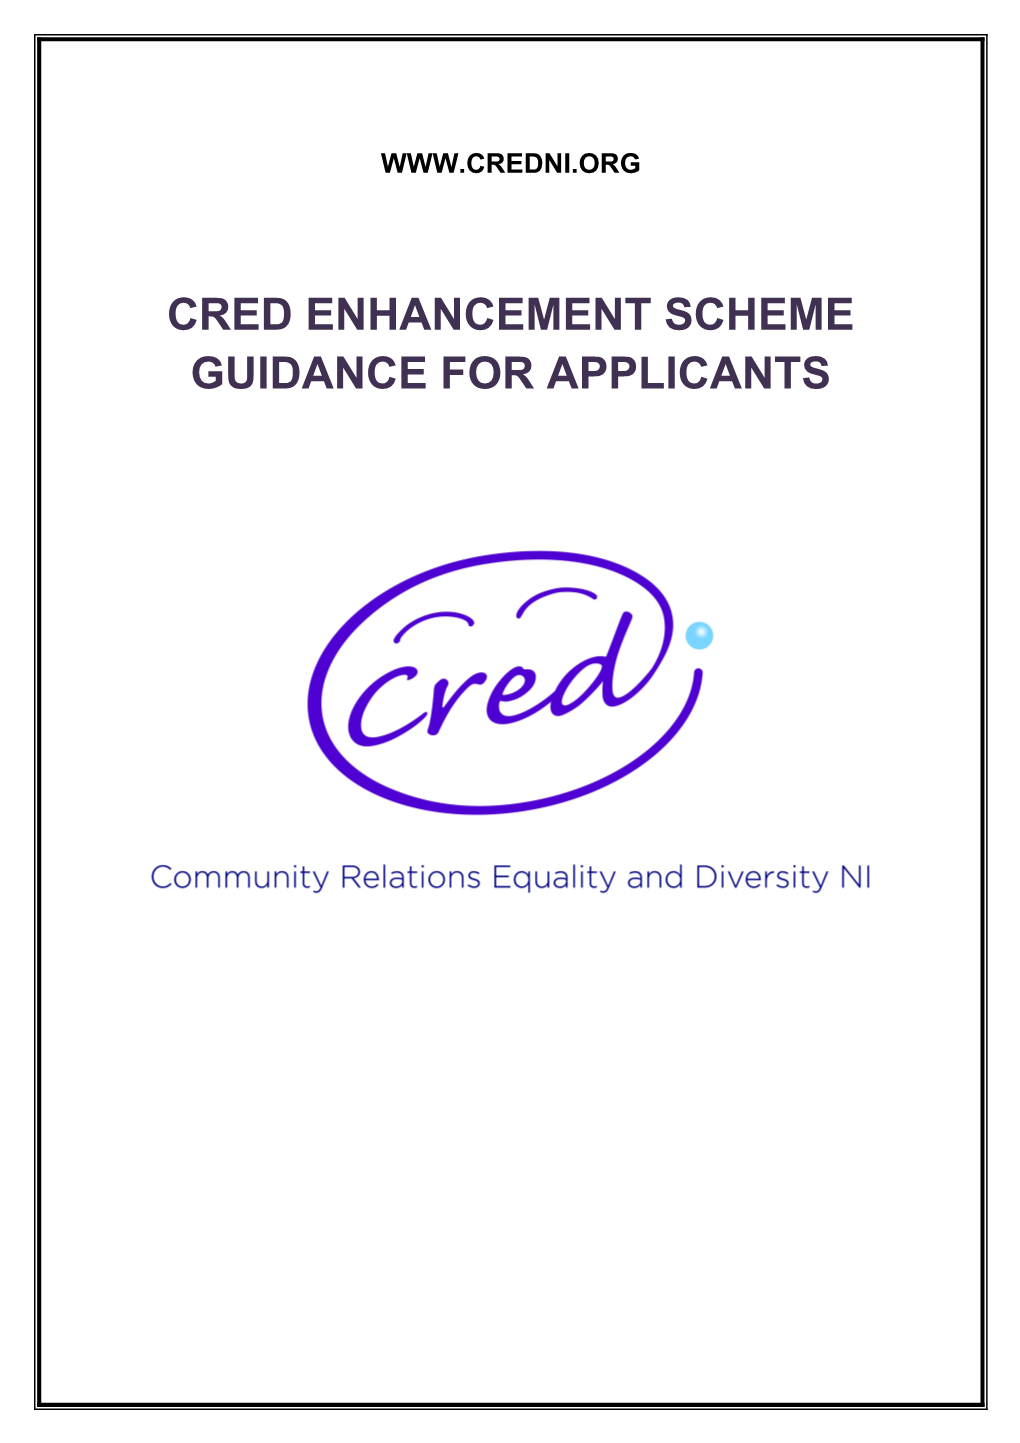 Cred Enhancement Scheme Guidance for Applicants